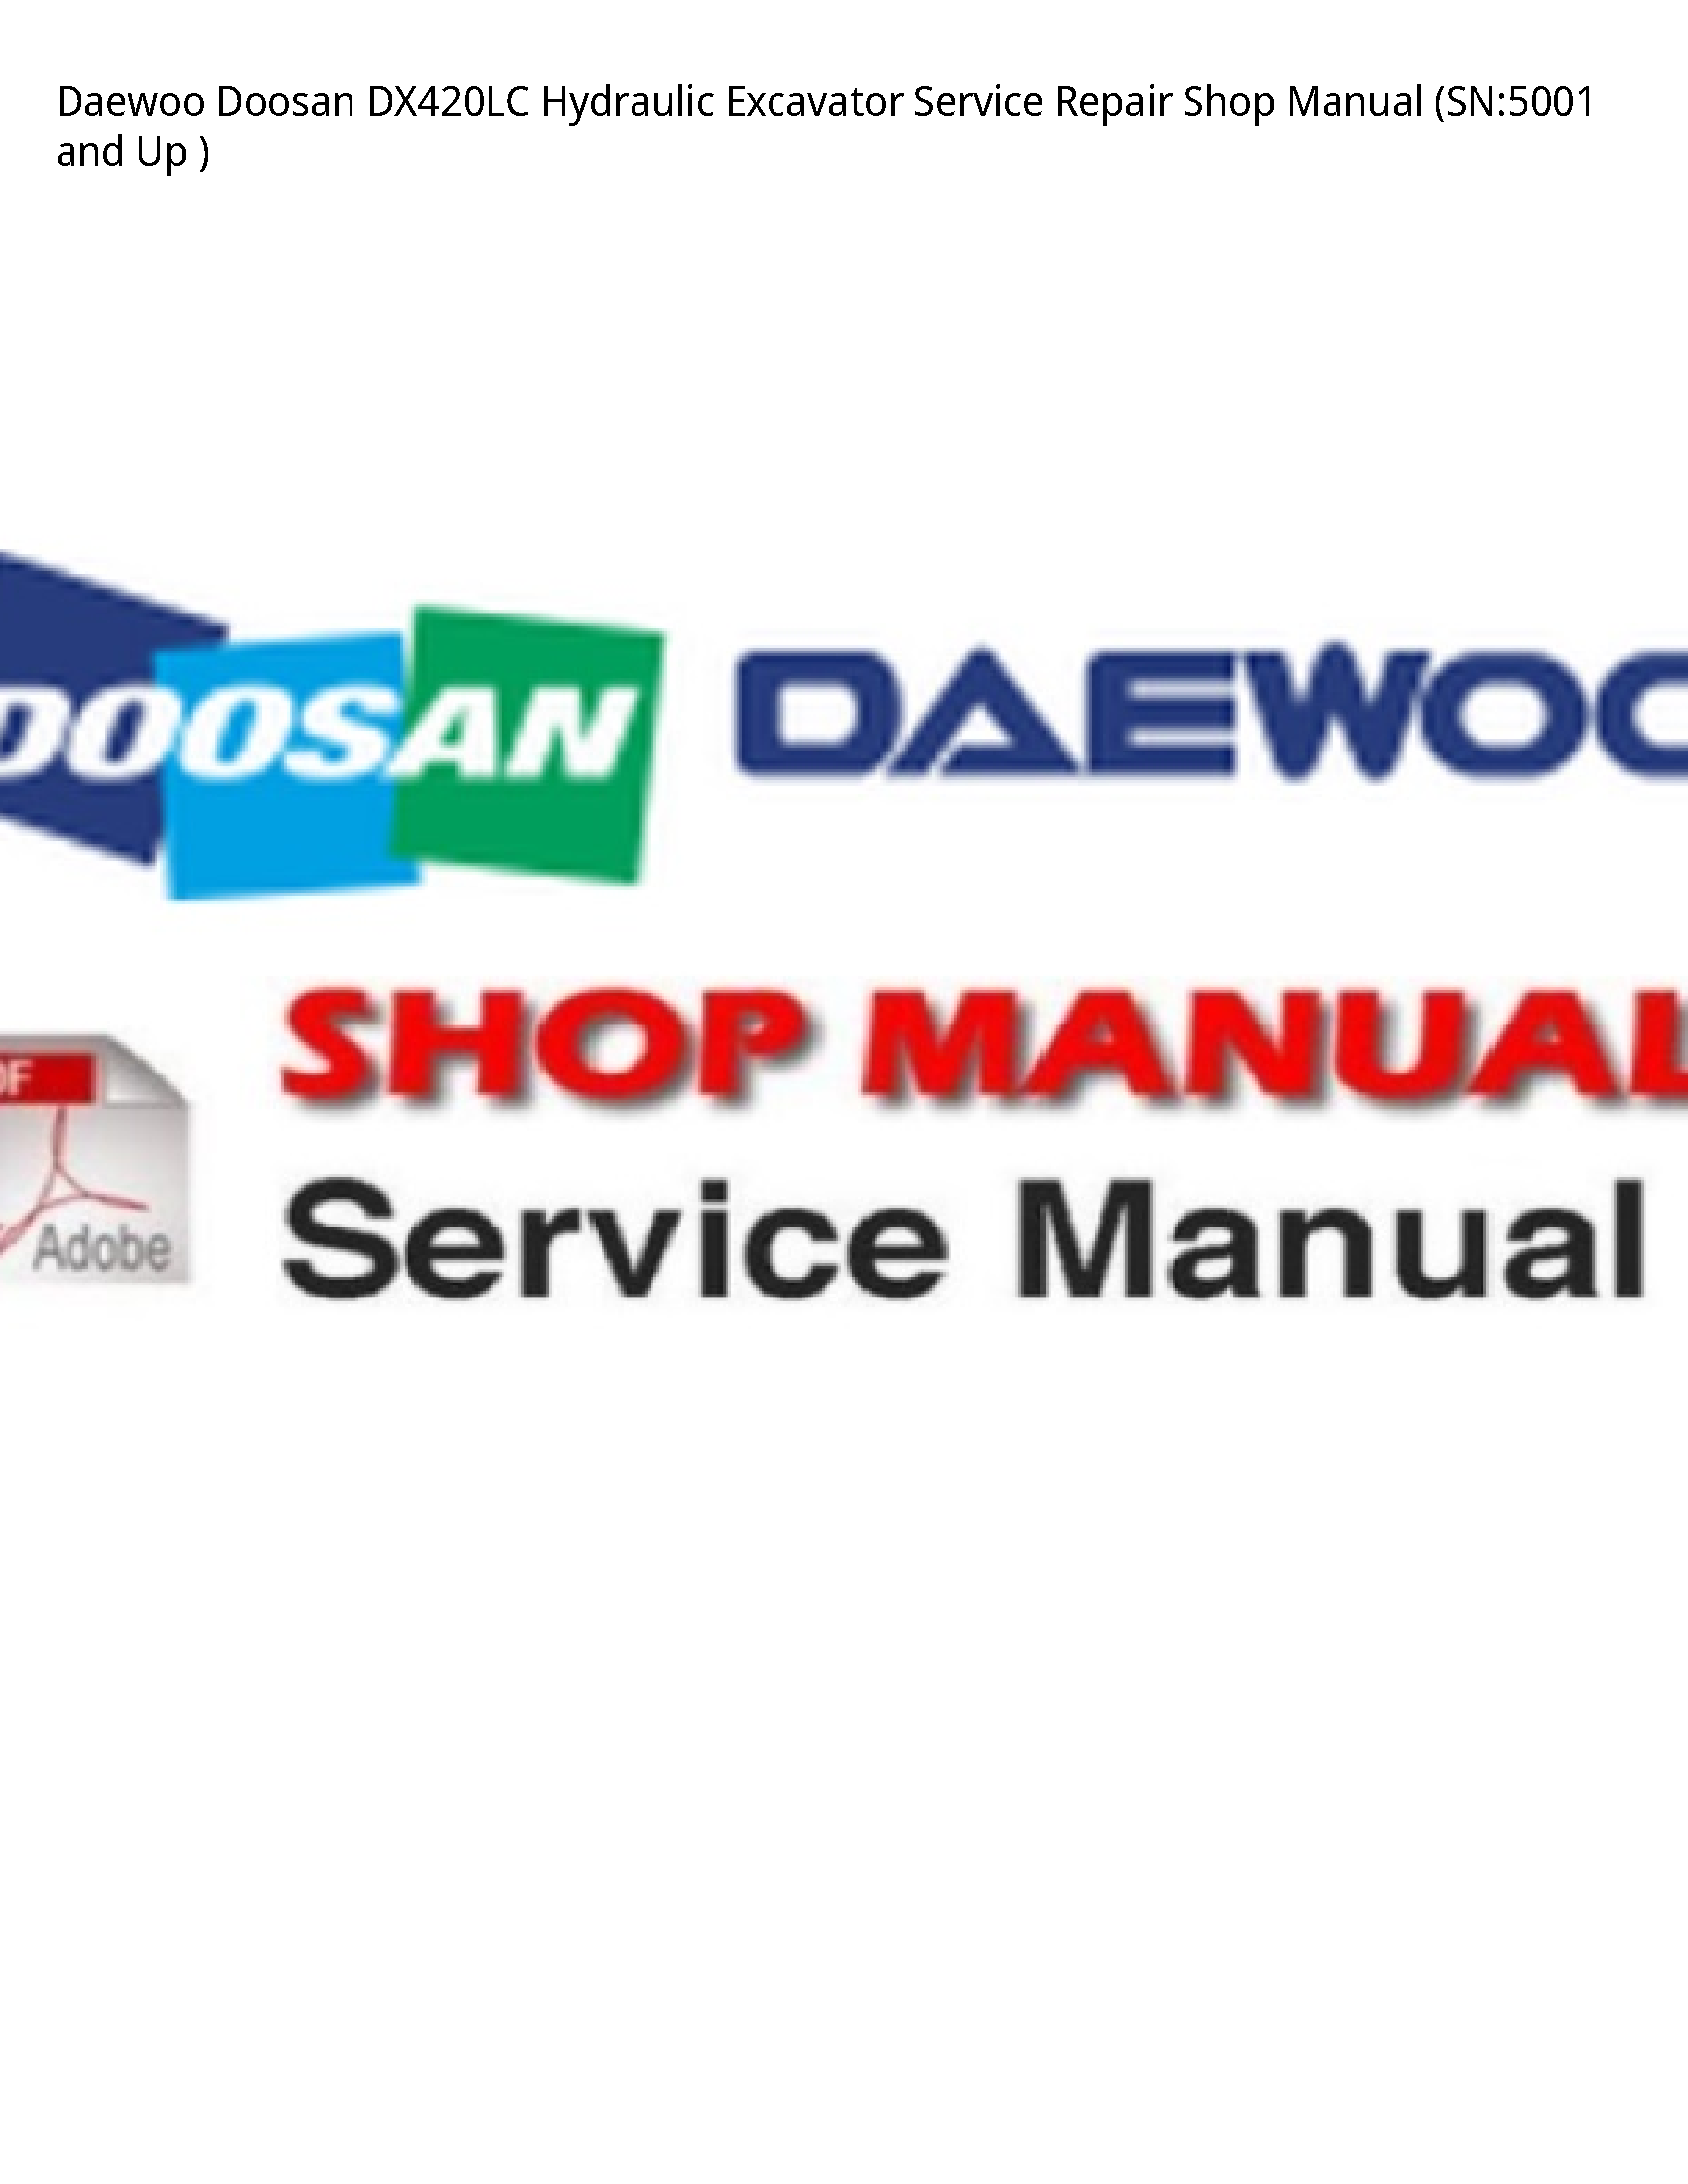 Daewoo Doosan DX420LC Hydraulic Excavator manual